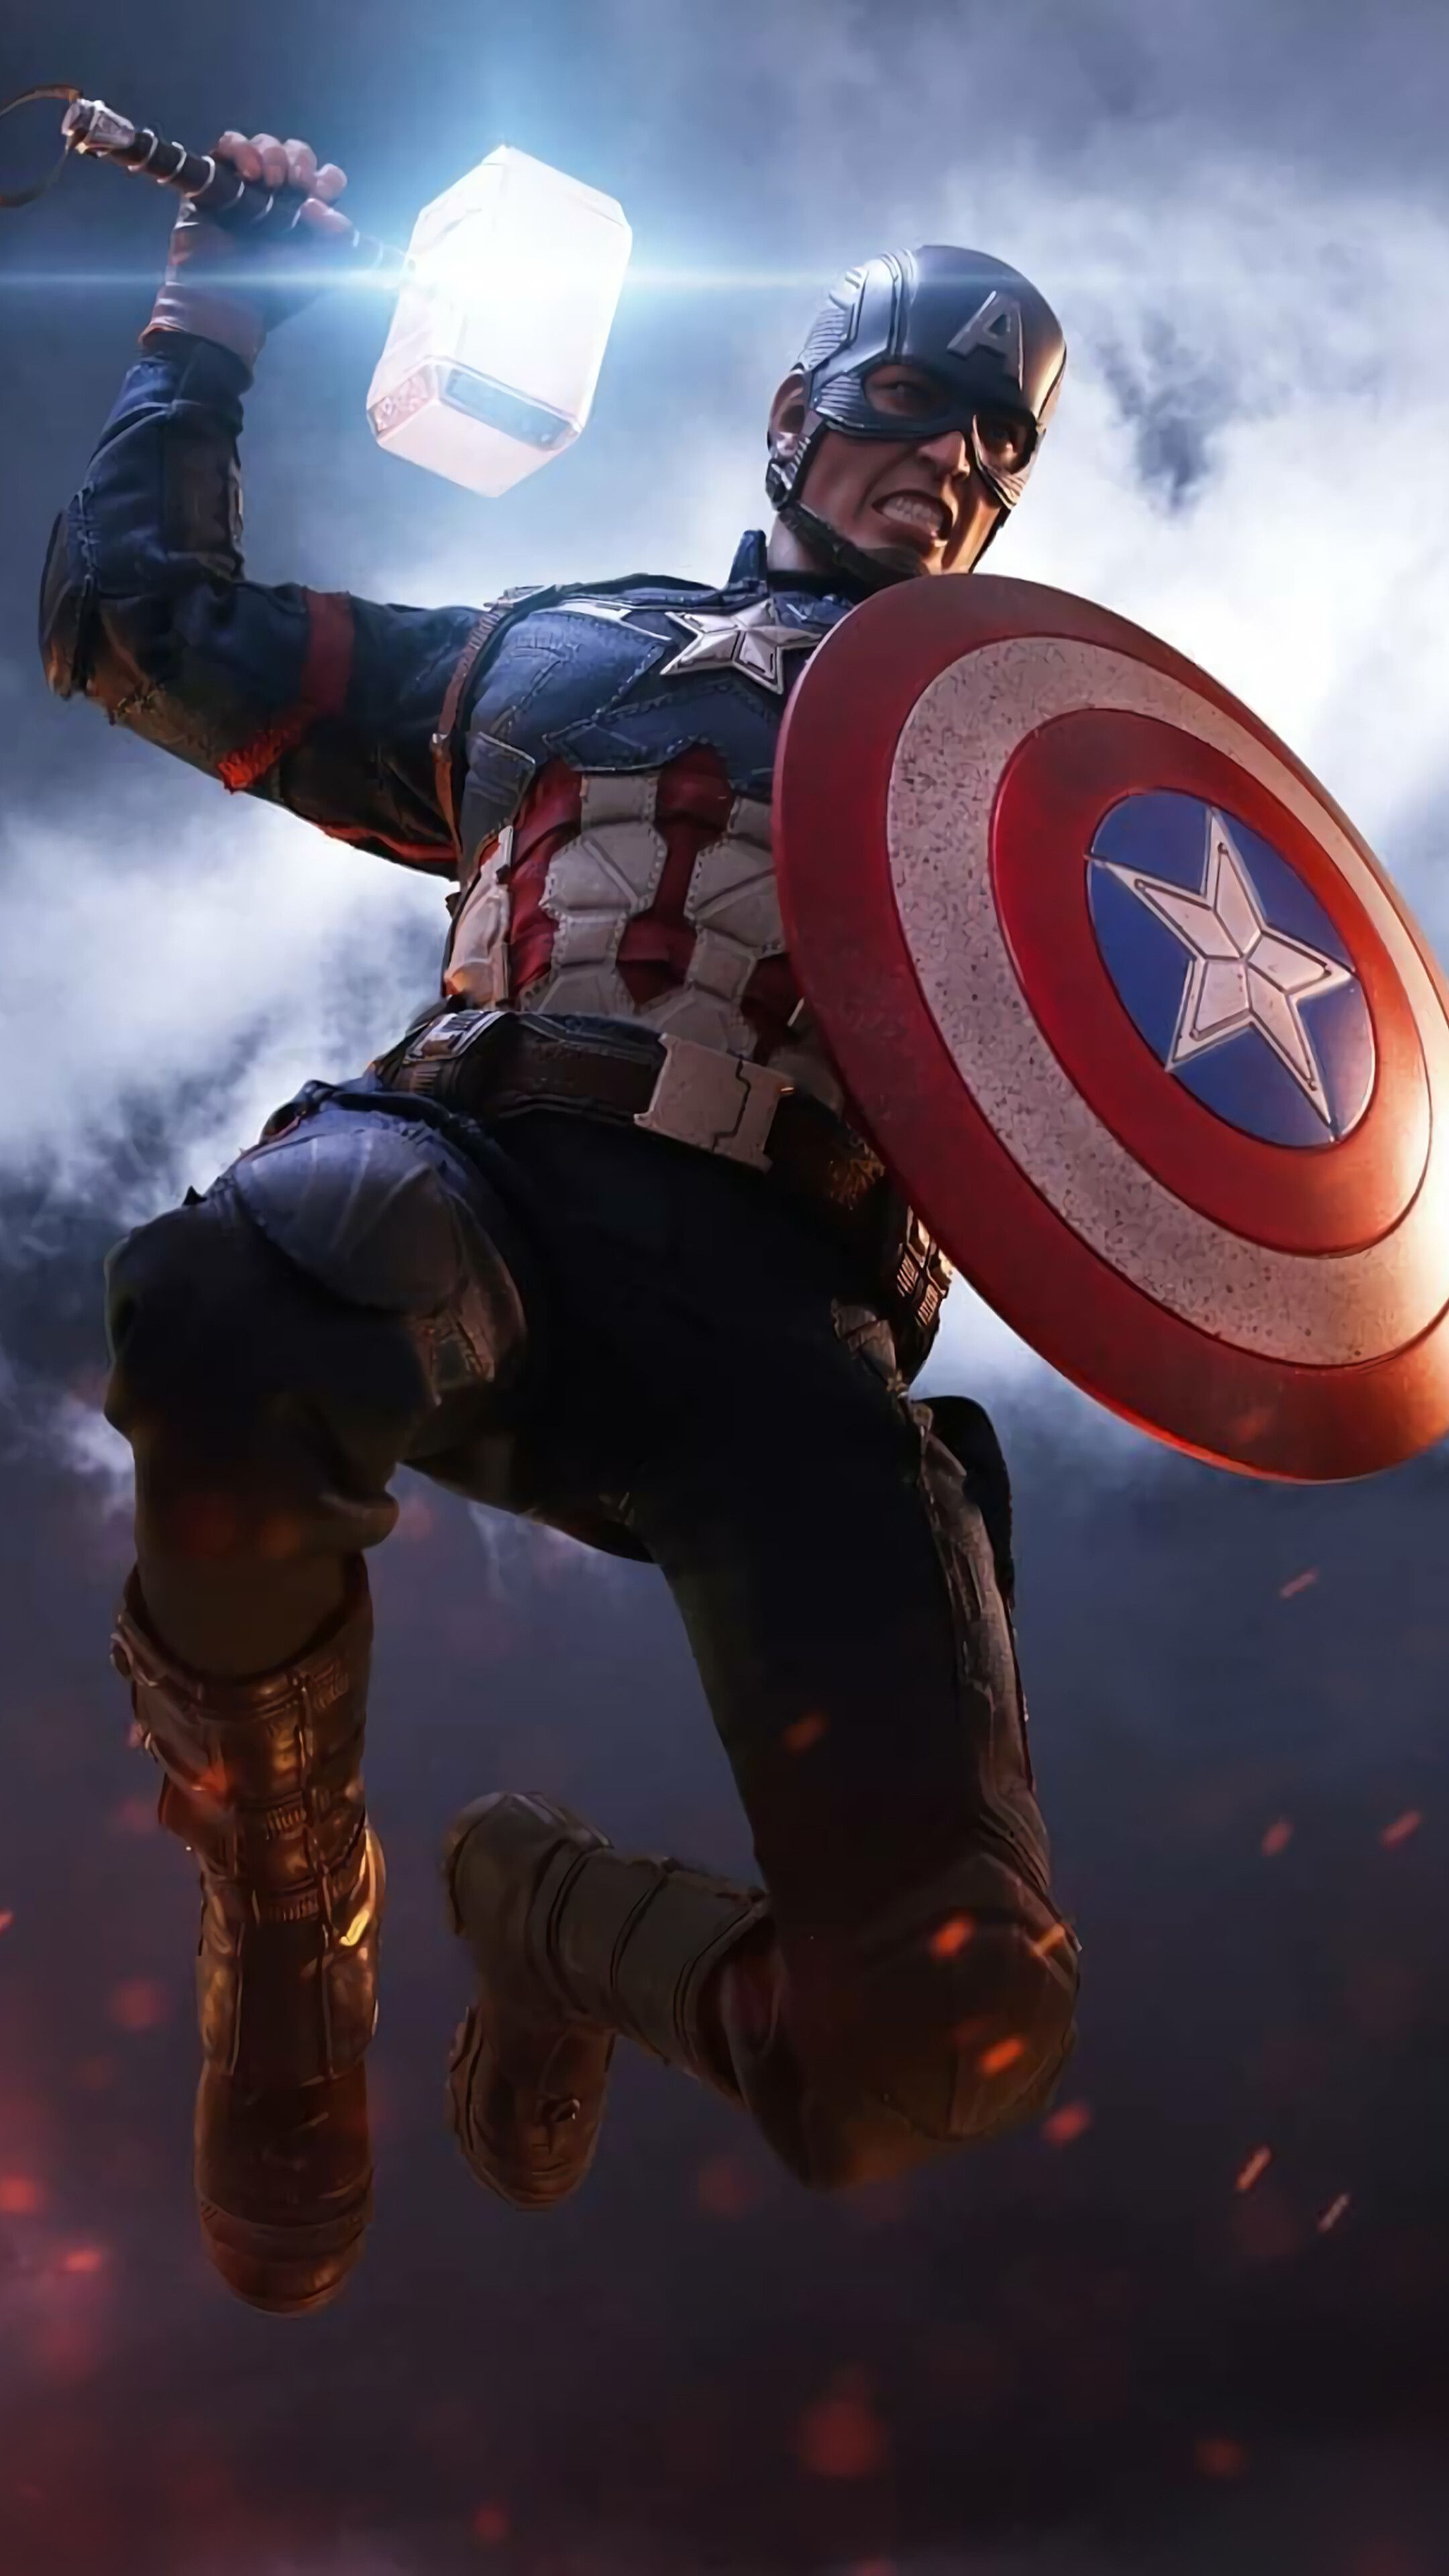 Captain America, Mjolnir, Hammer, Shield, Avengers Endgame, 4K phone HD Wallpaper, Image, Background, Photo and Picture. Mocah HD Wallpaper